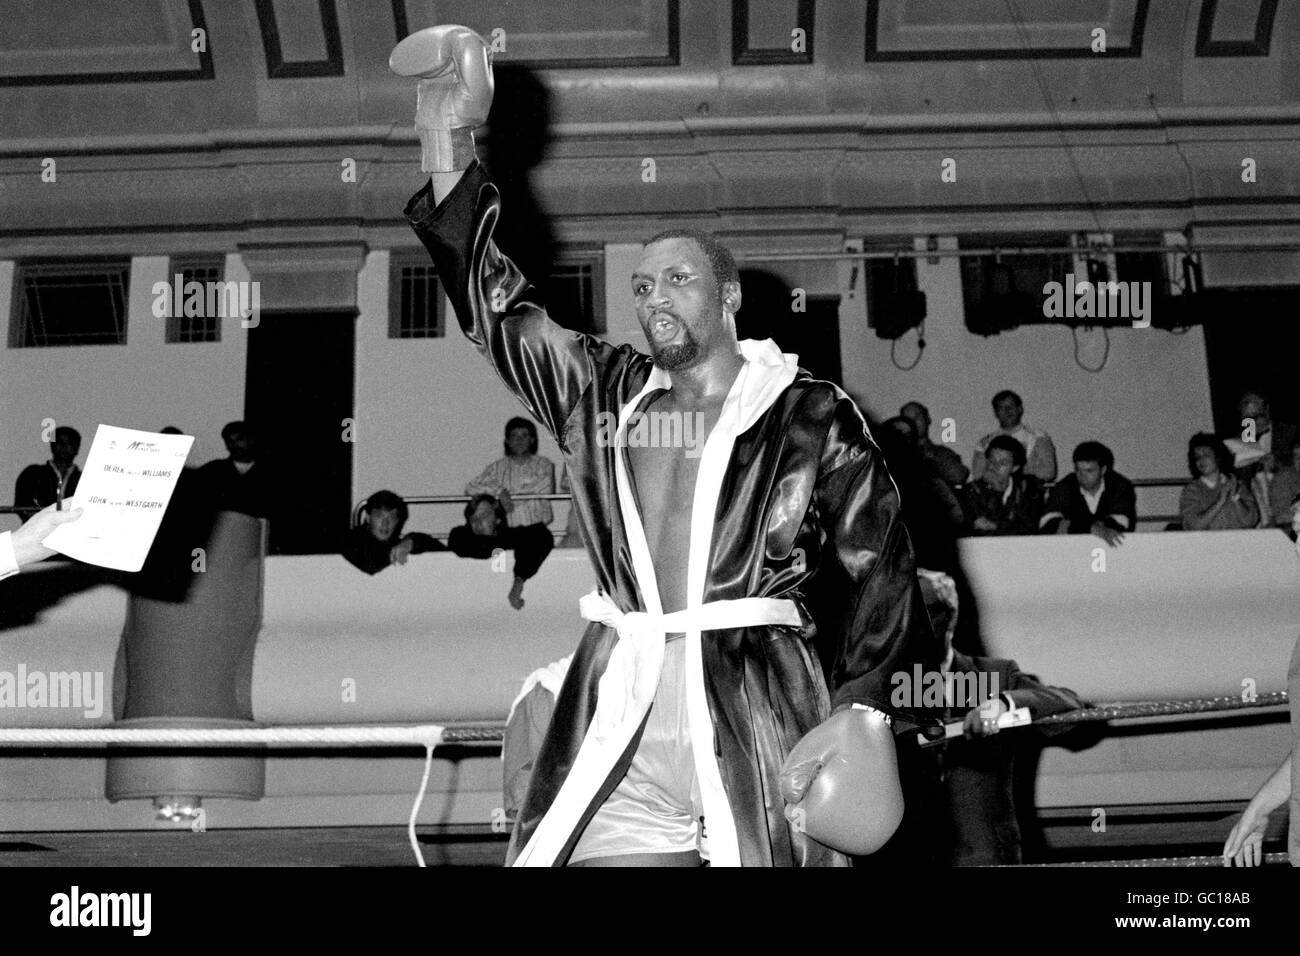 Boxing - Heavyweight Bout - Derek Williams v John Westgarth Stock Photo